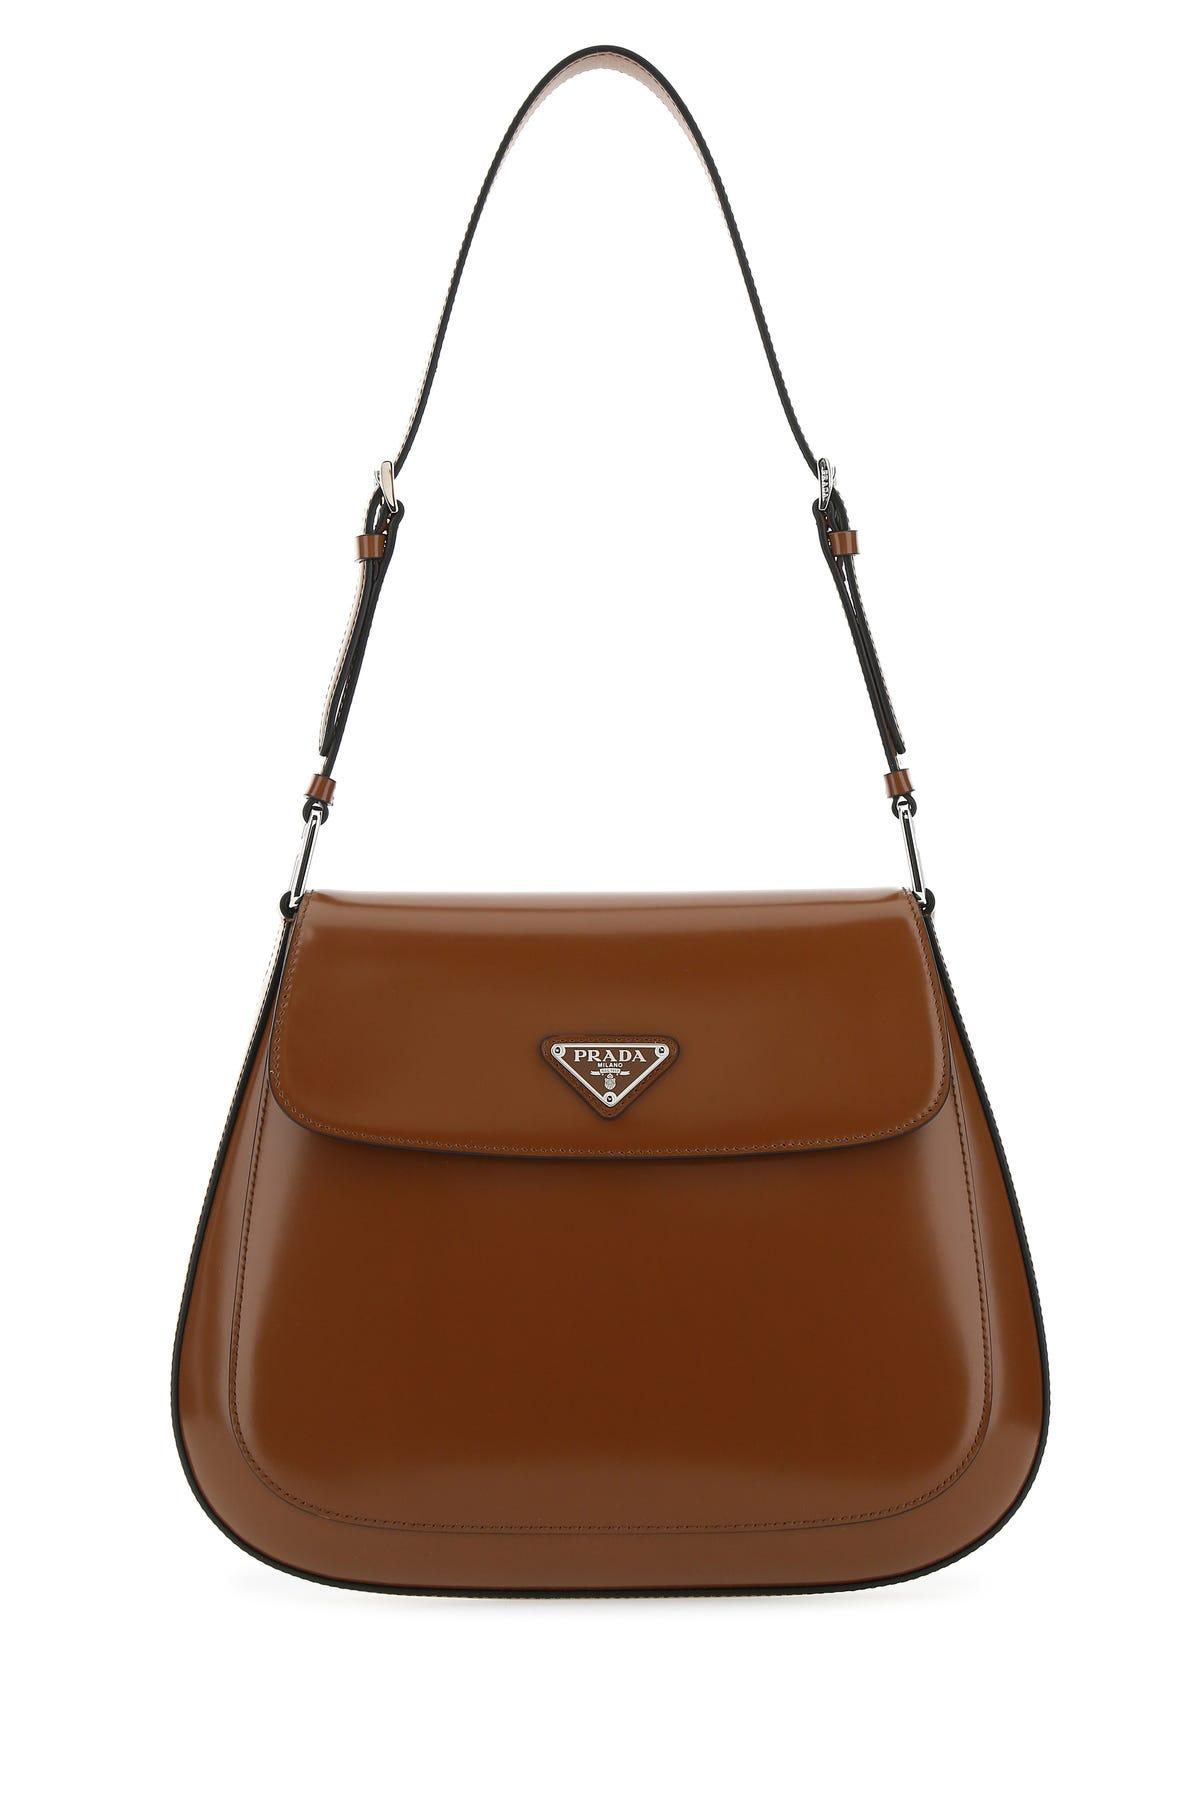 Prada Leather Cleo Shoulder Bag in Brown